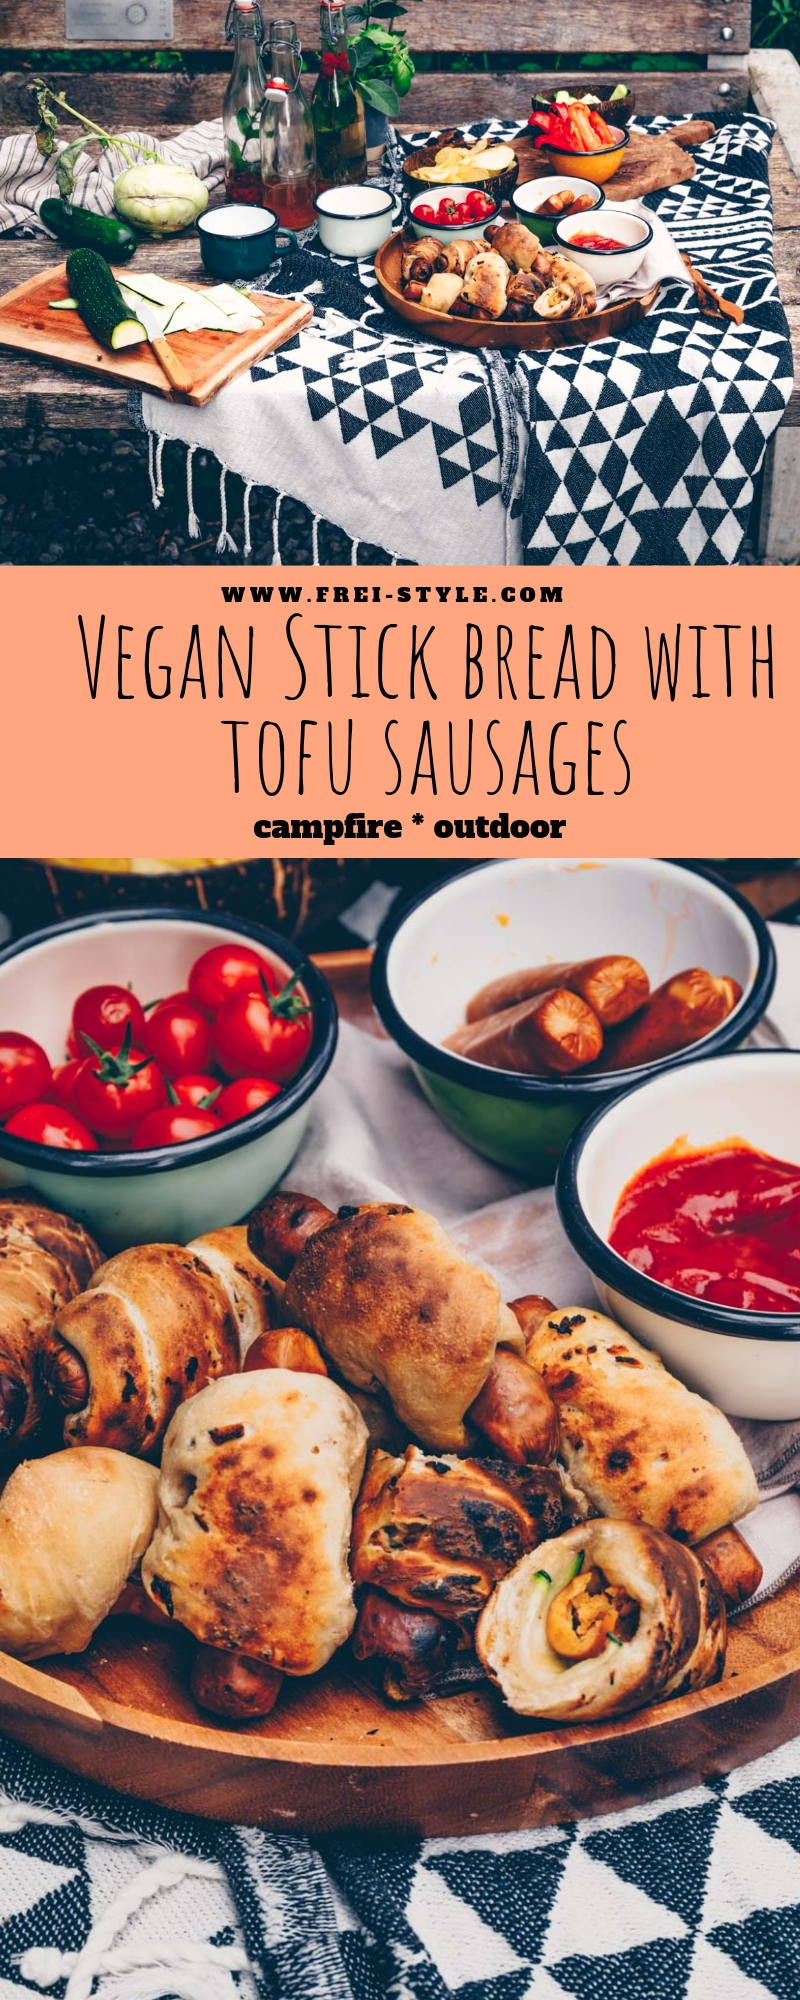 Vegan stick bread with tofu sausages